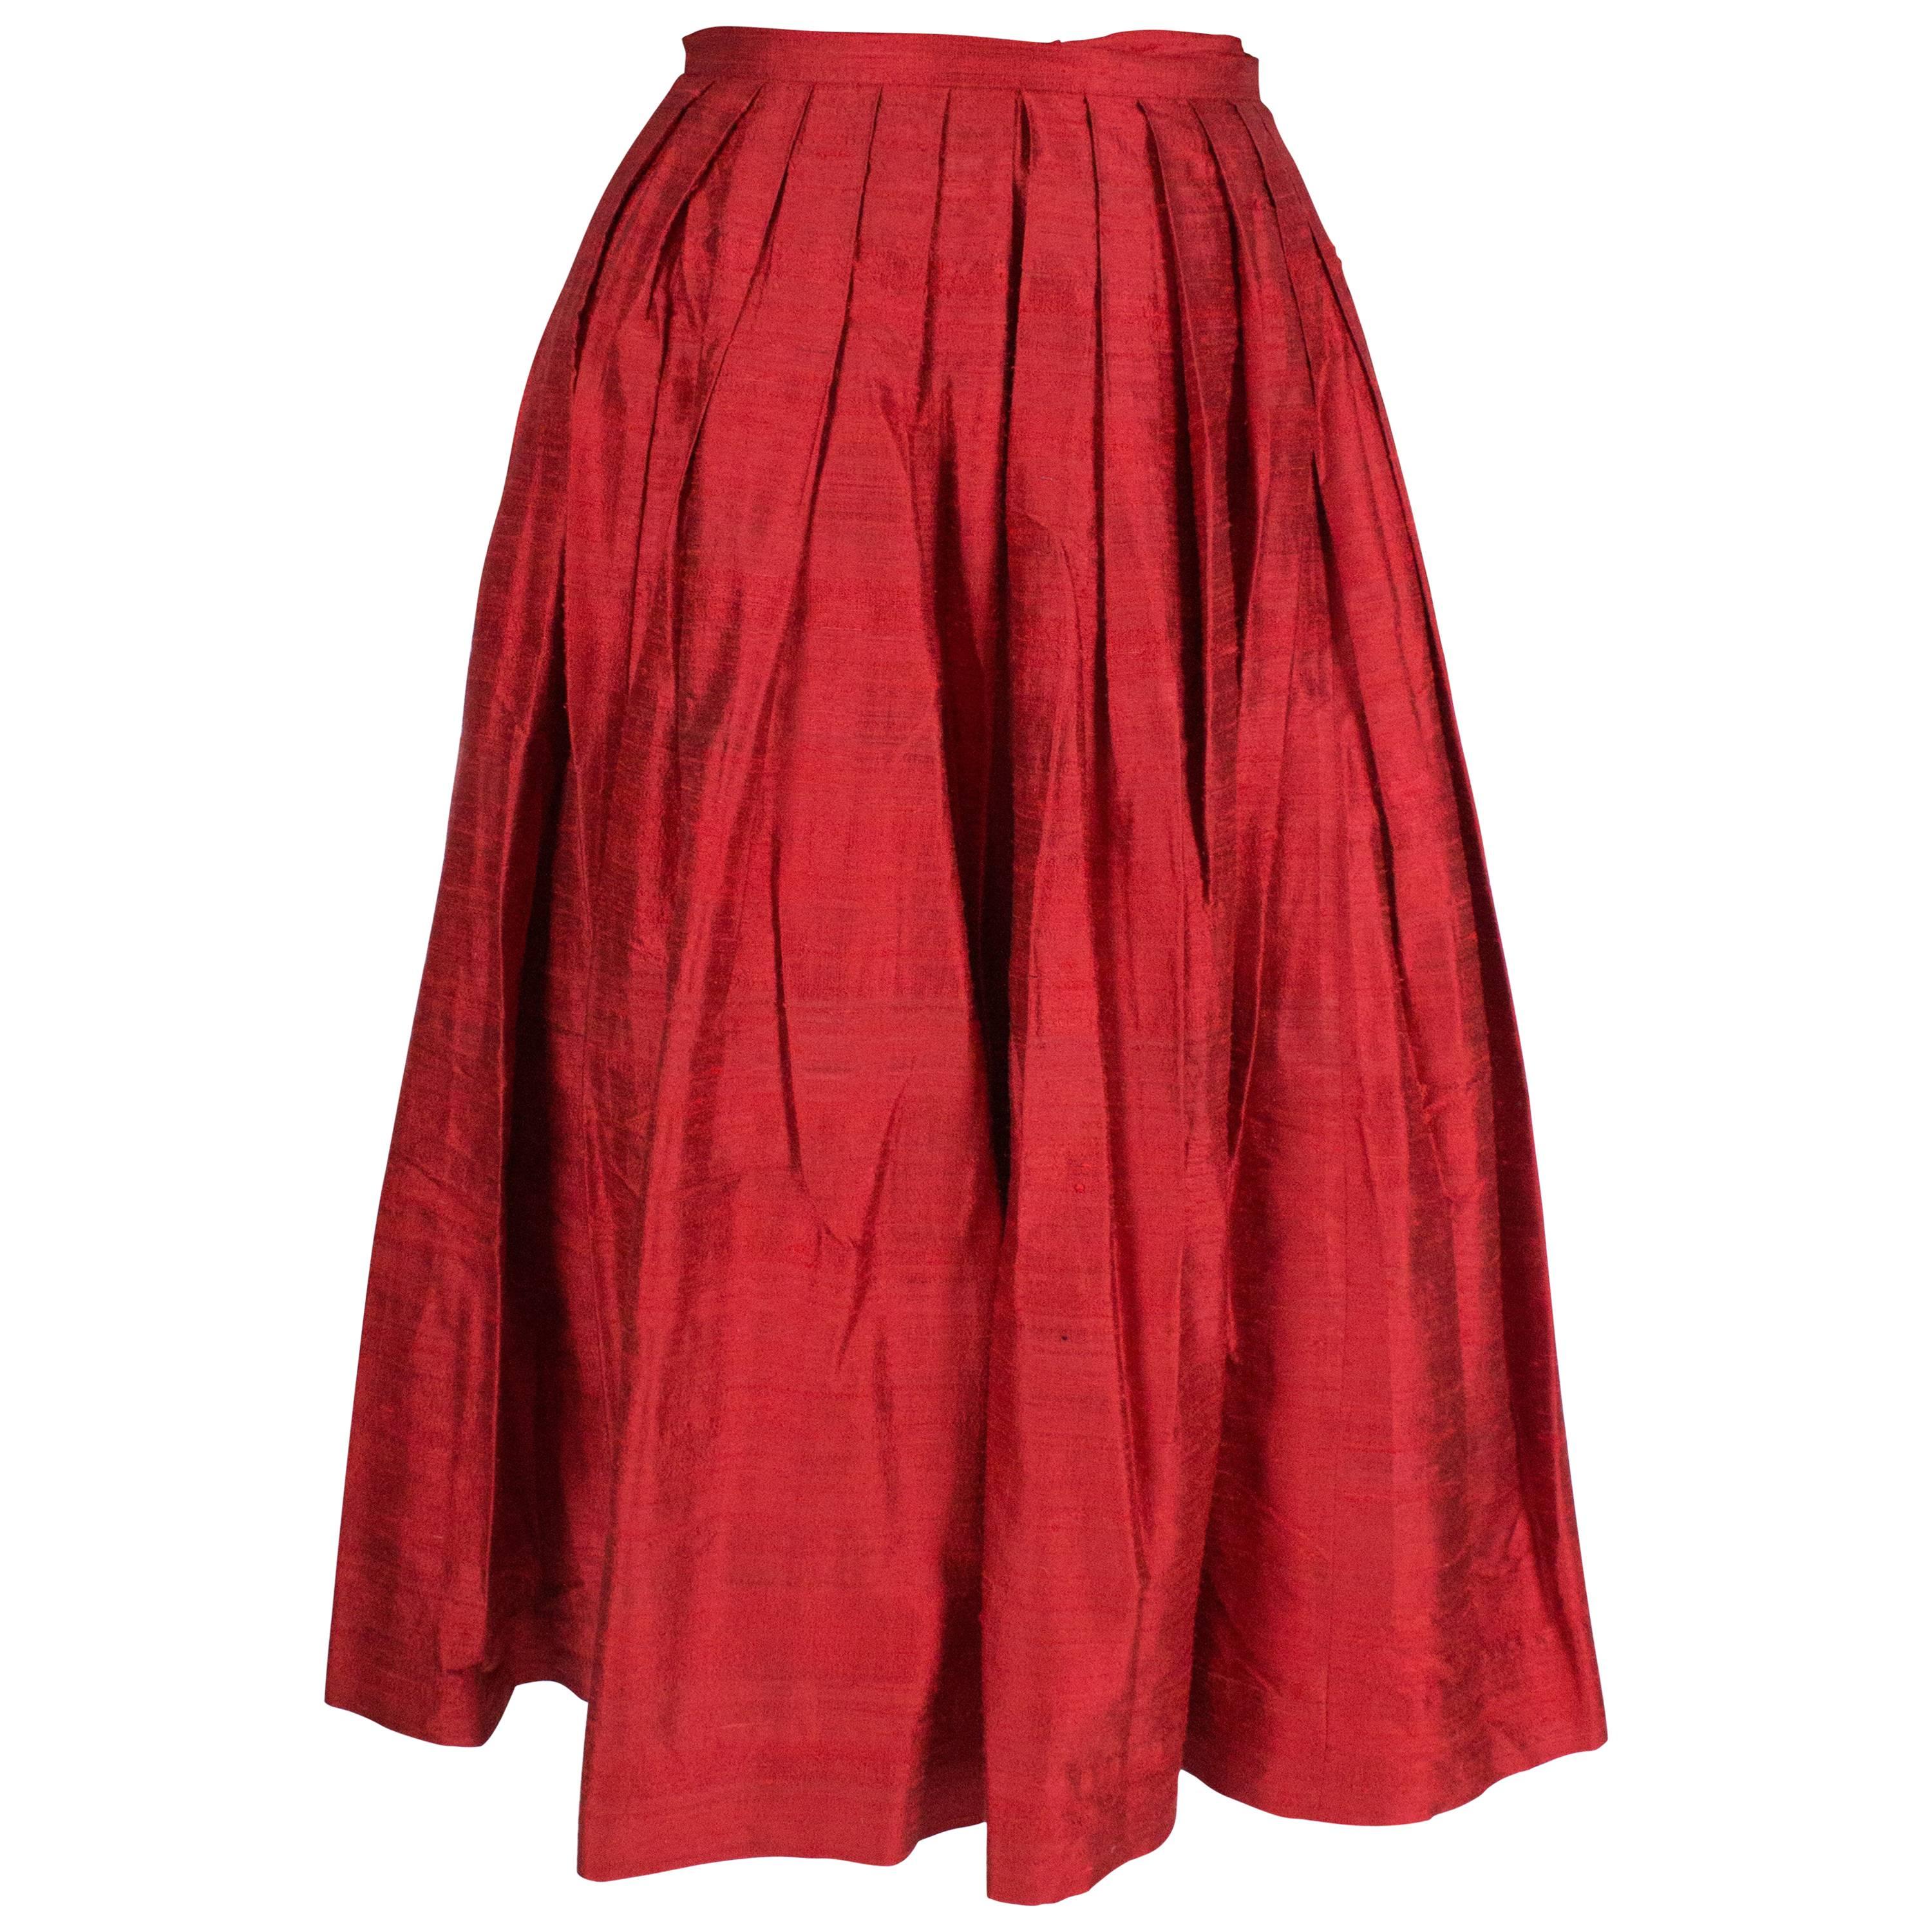 Caroline Charles Vintage Silk Red Skirt